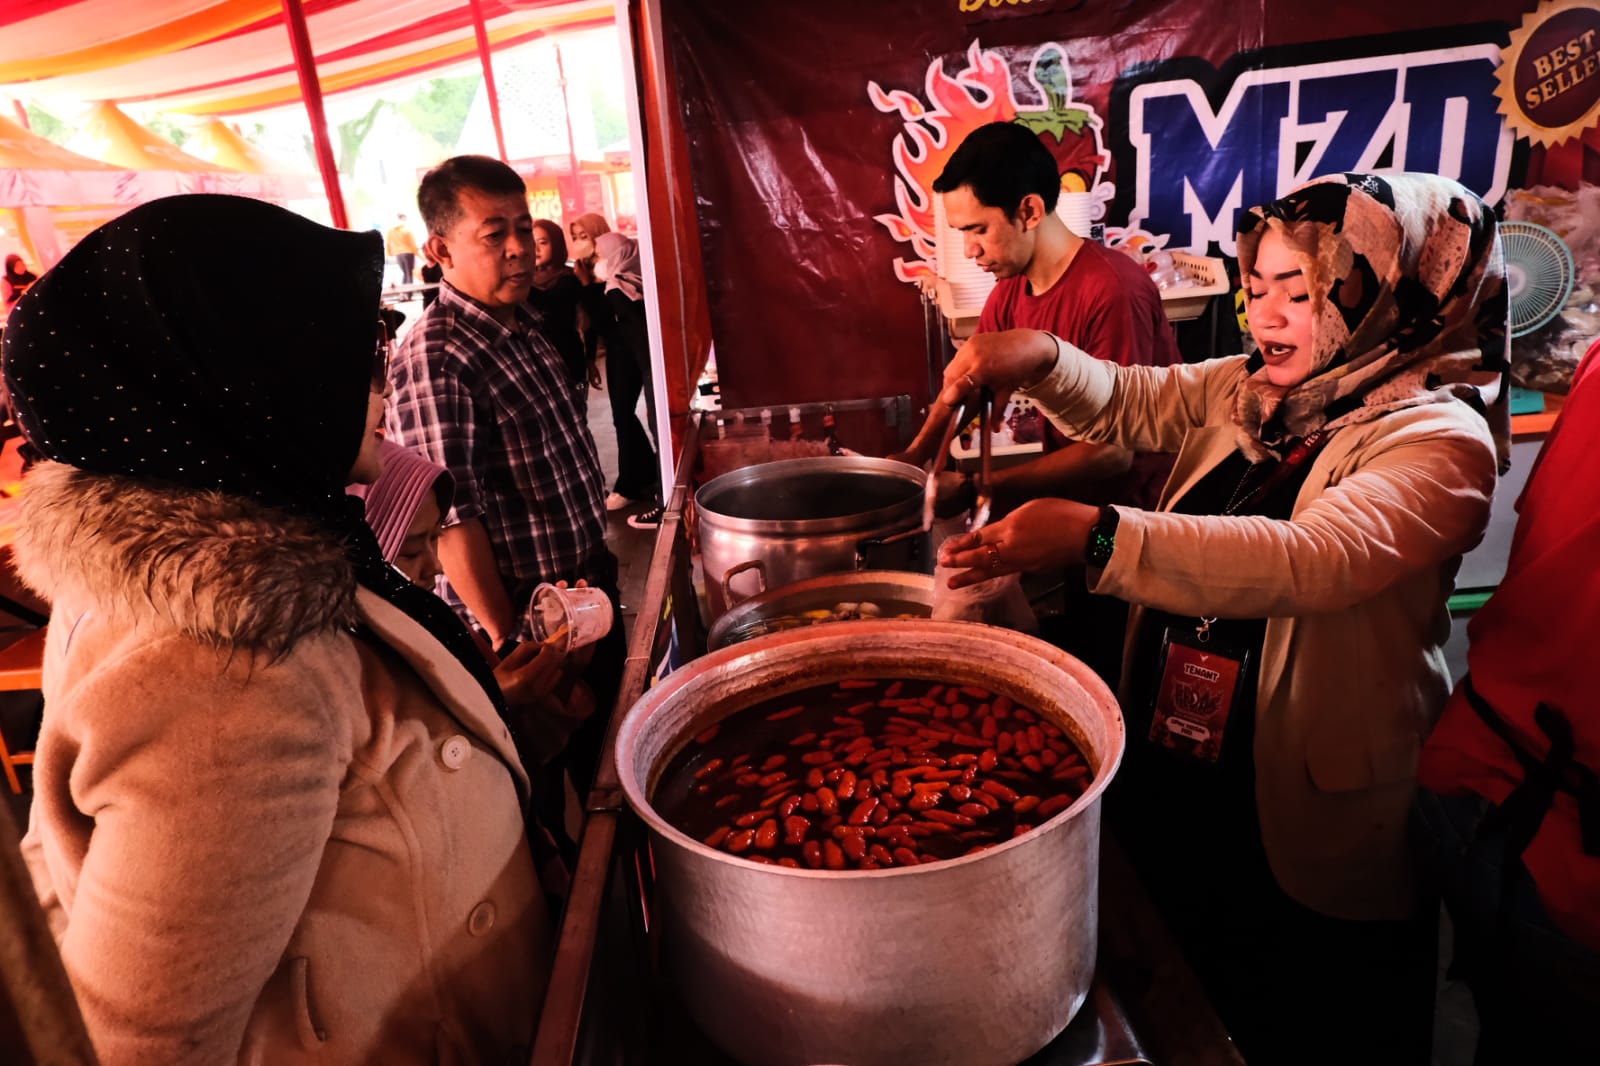 Festival Kuliner pedas dibuka Bupati Garut di alun-alun Garut